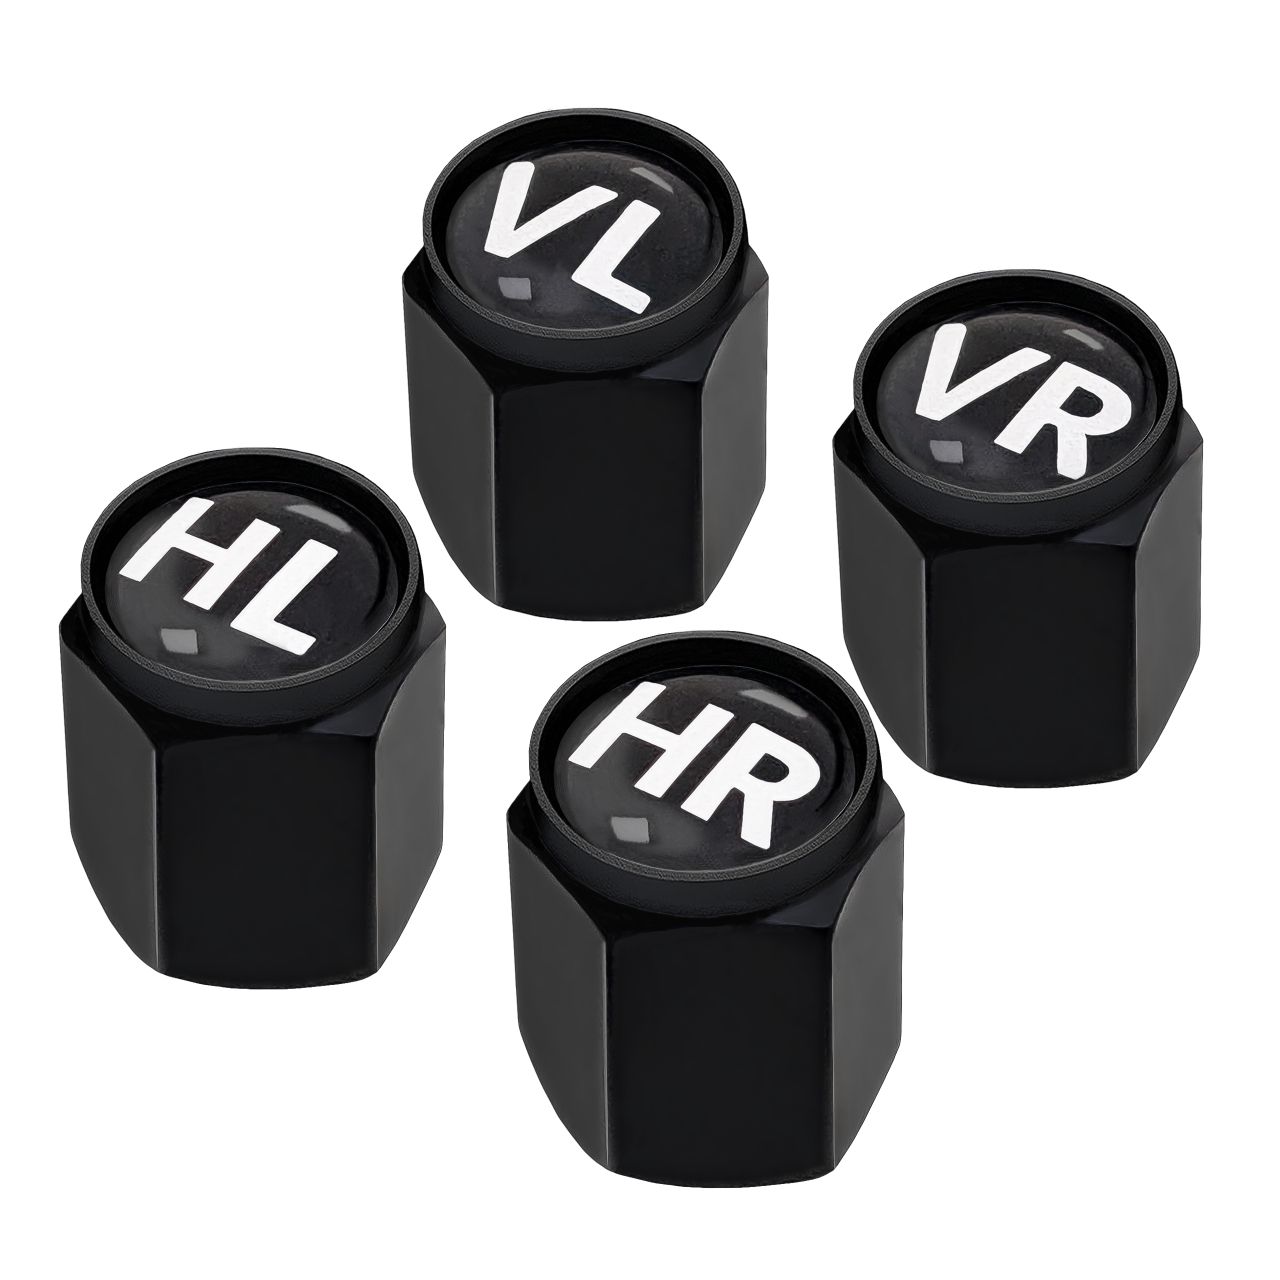 Alu Ventilkappen mit Beschriftung VL,VR,HL,HR in schwarz 4er Set-0